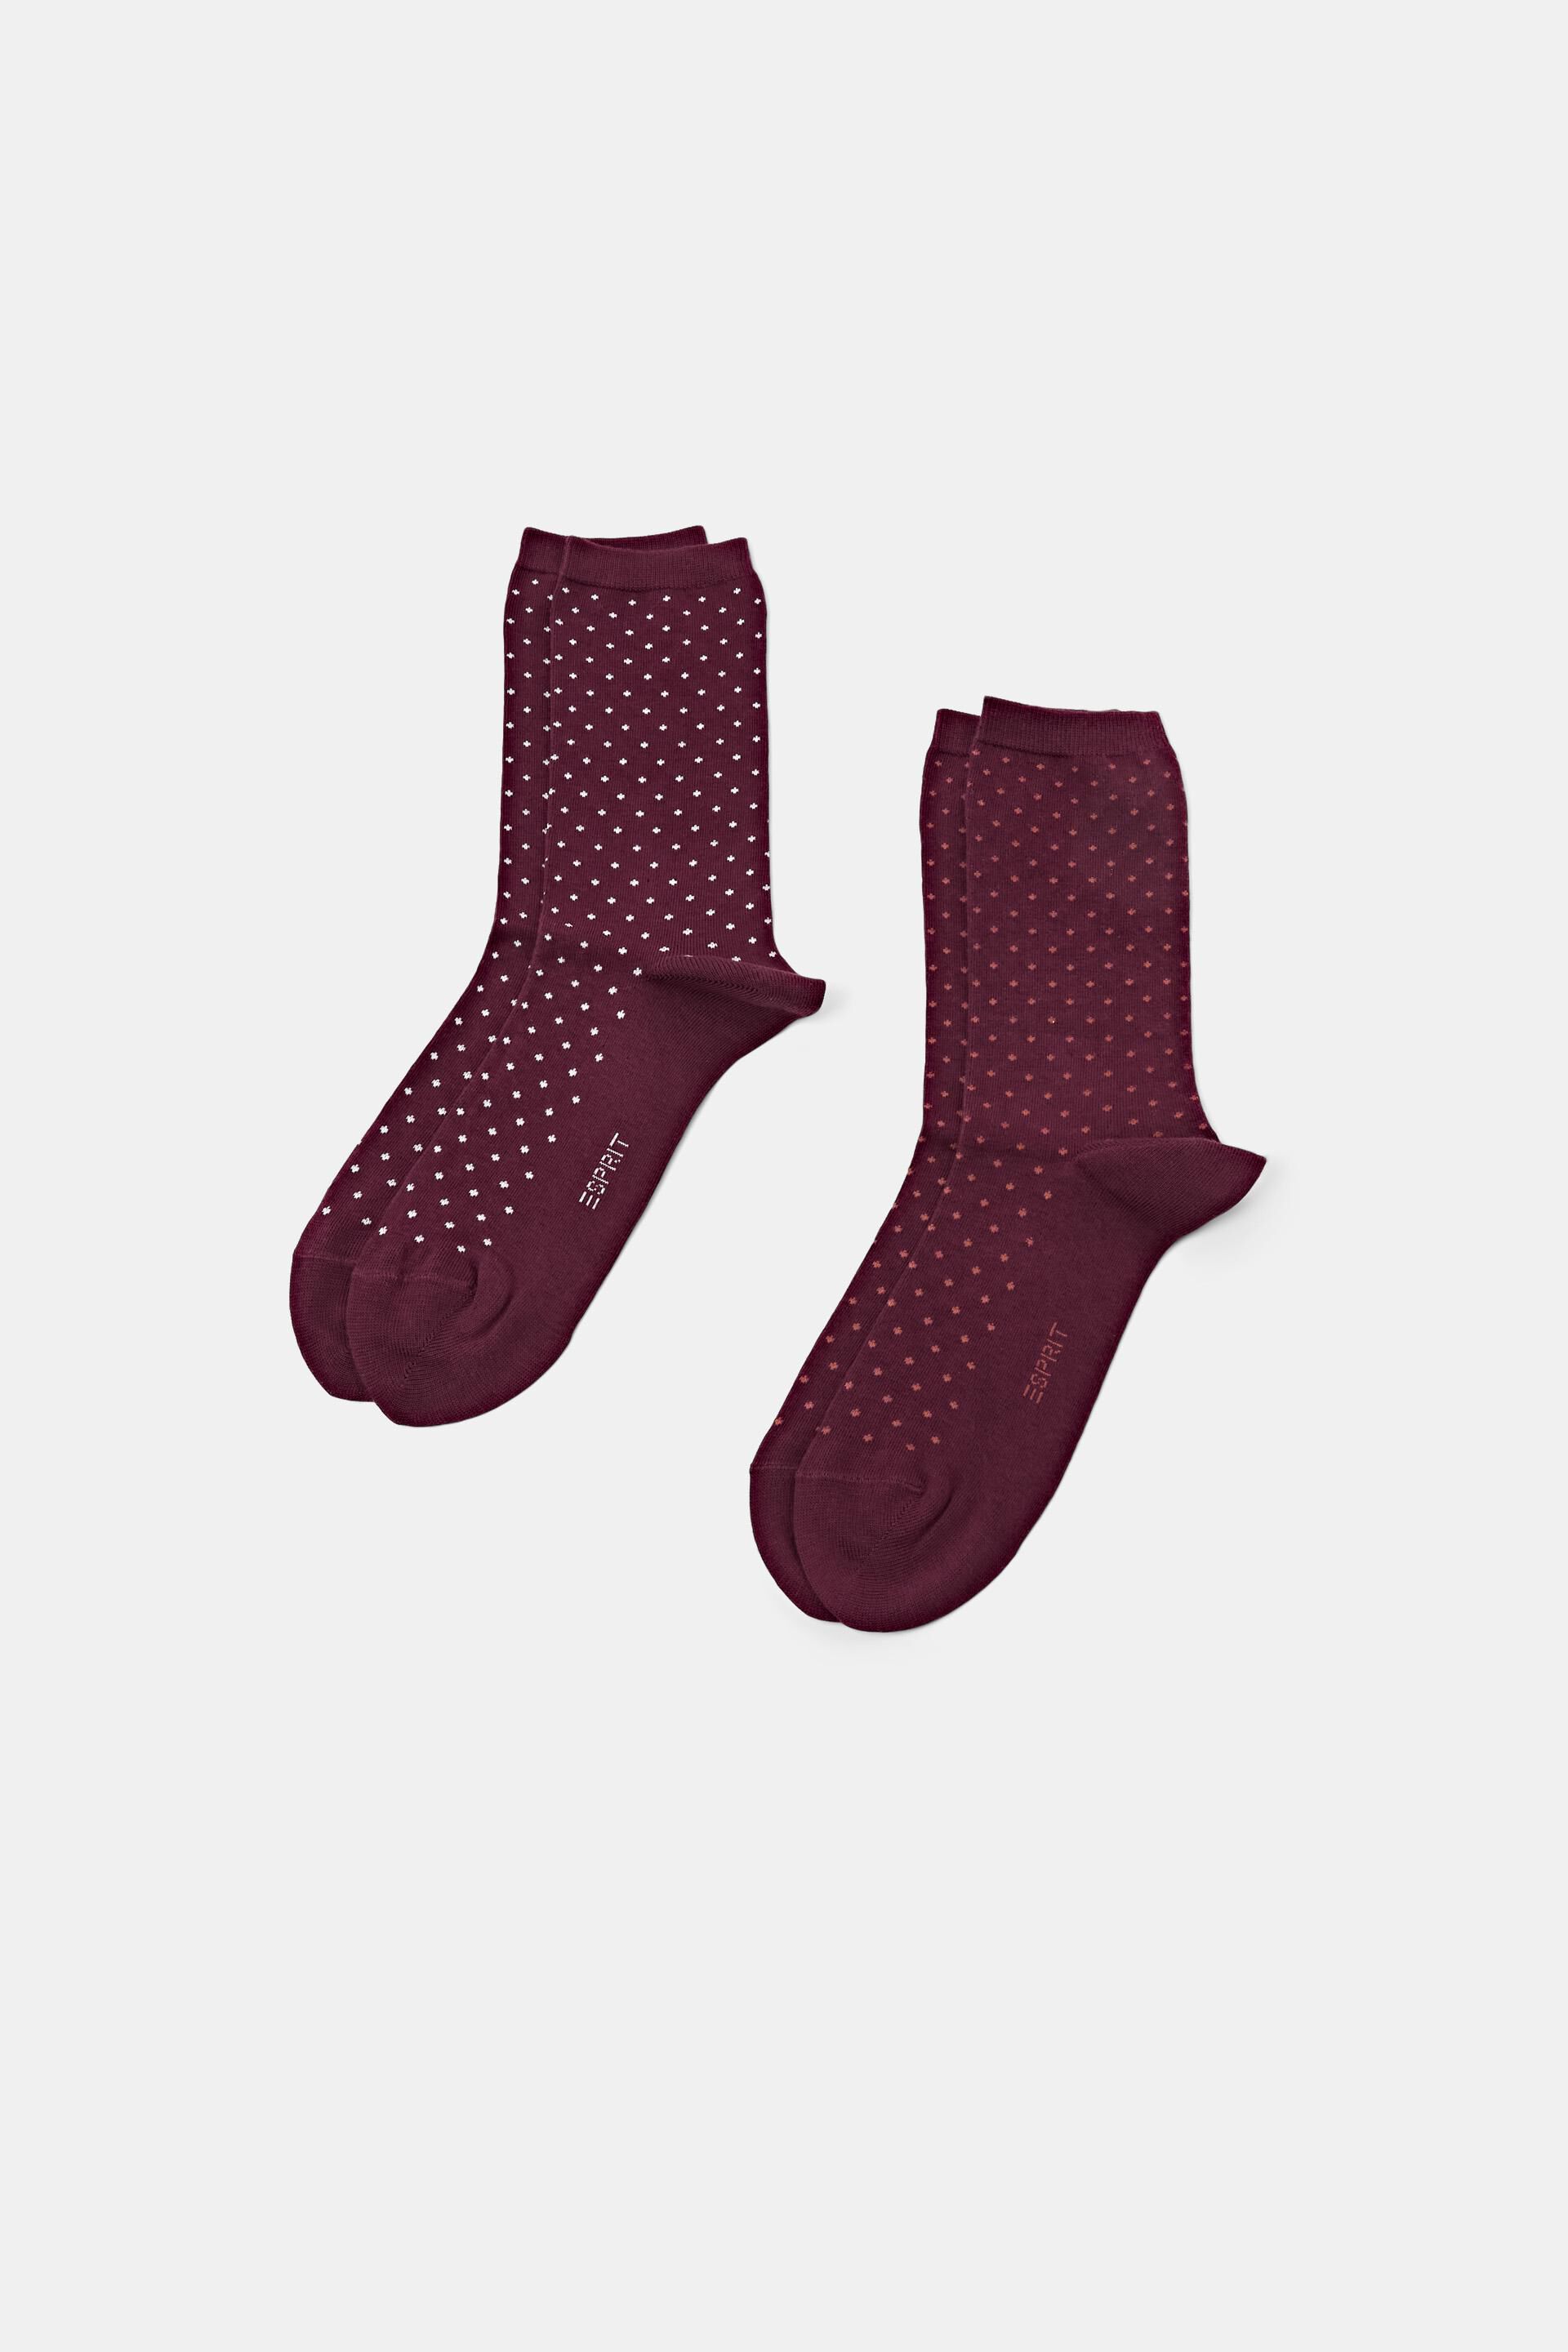 Esprit organic socks, dot of polka 2-pack cotton